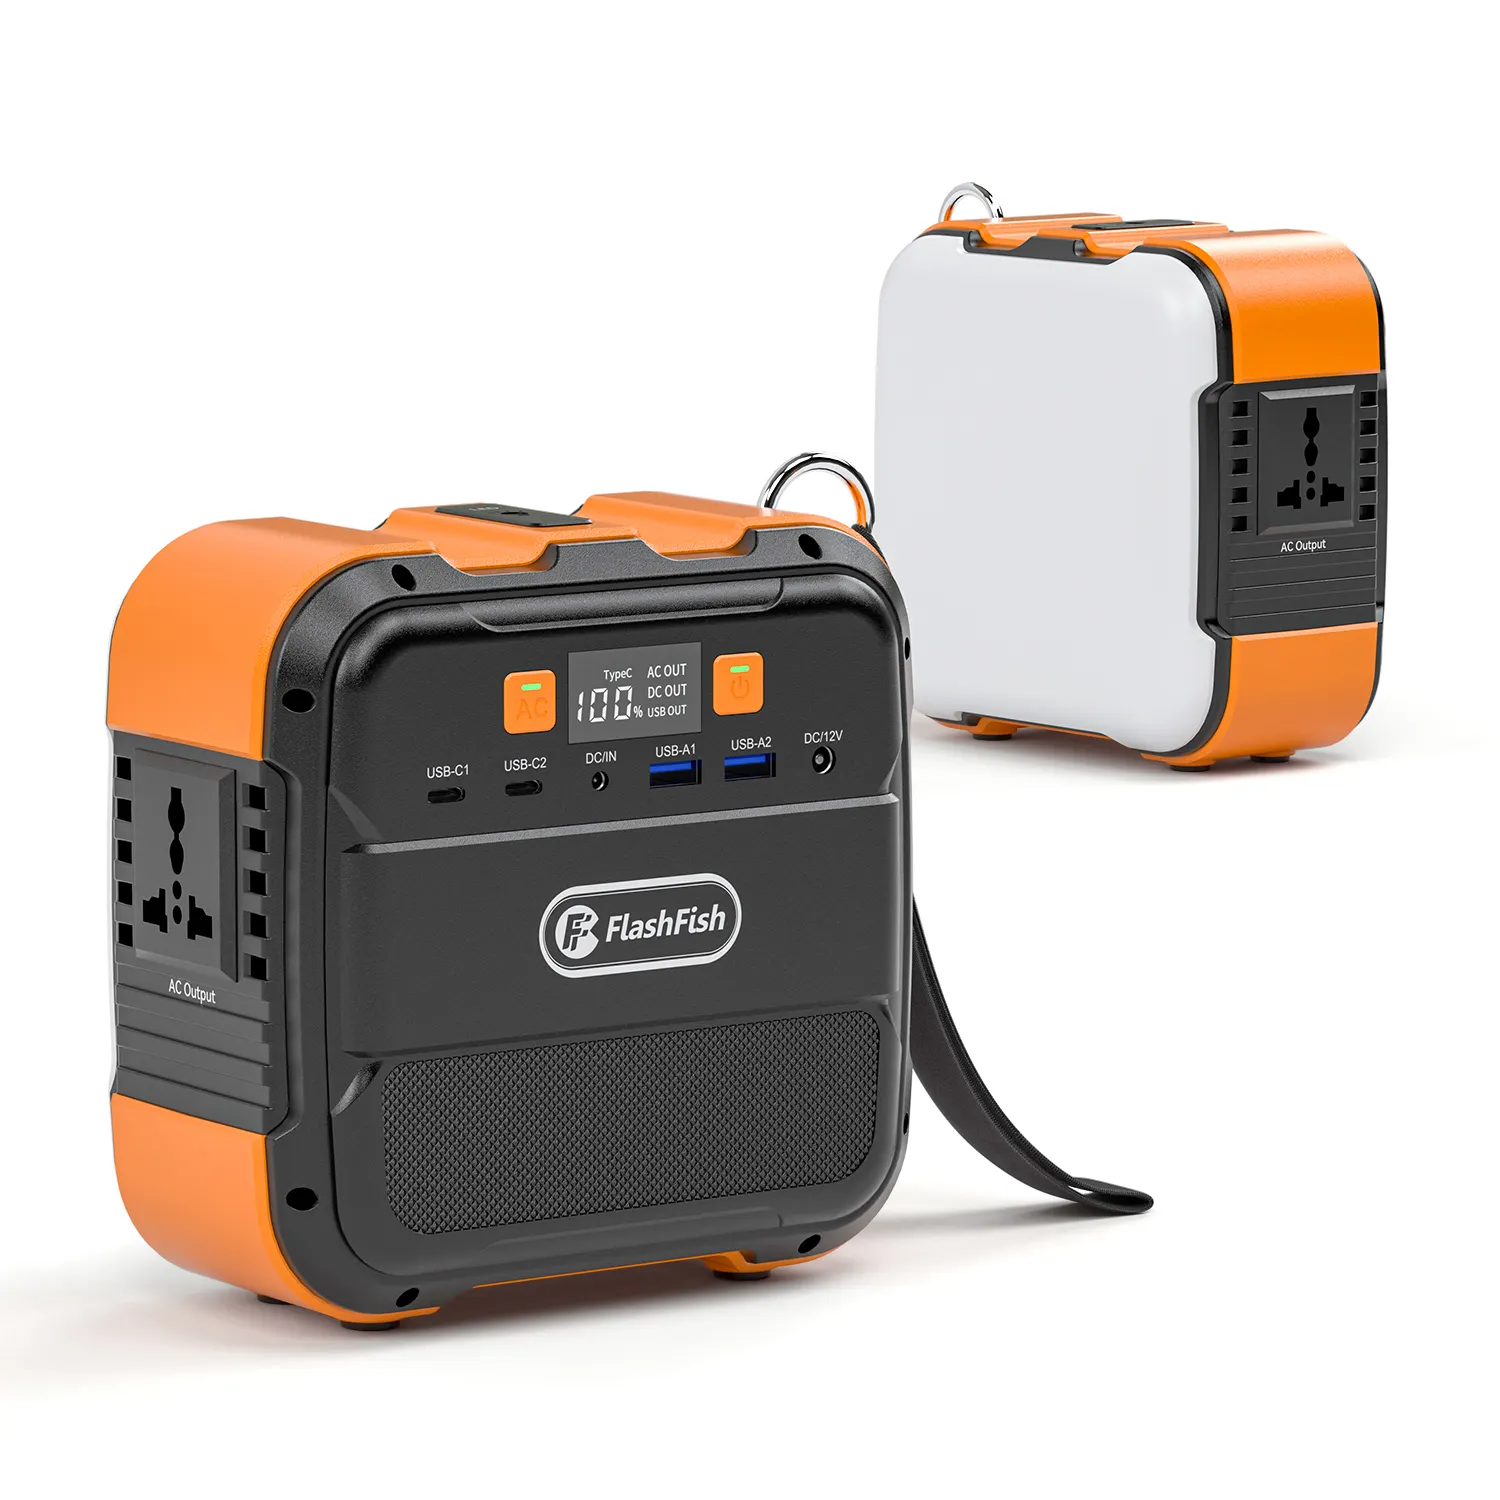 Flashfish Mini Portable Lithium Ion Battery Power Bank Station Emergency Charging A101 100W Power Generator